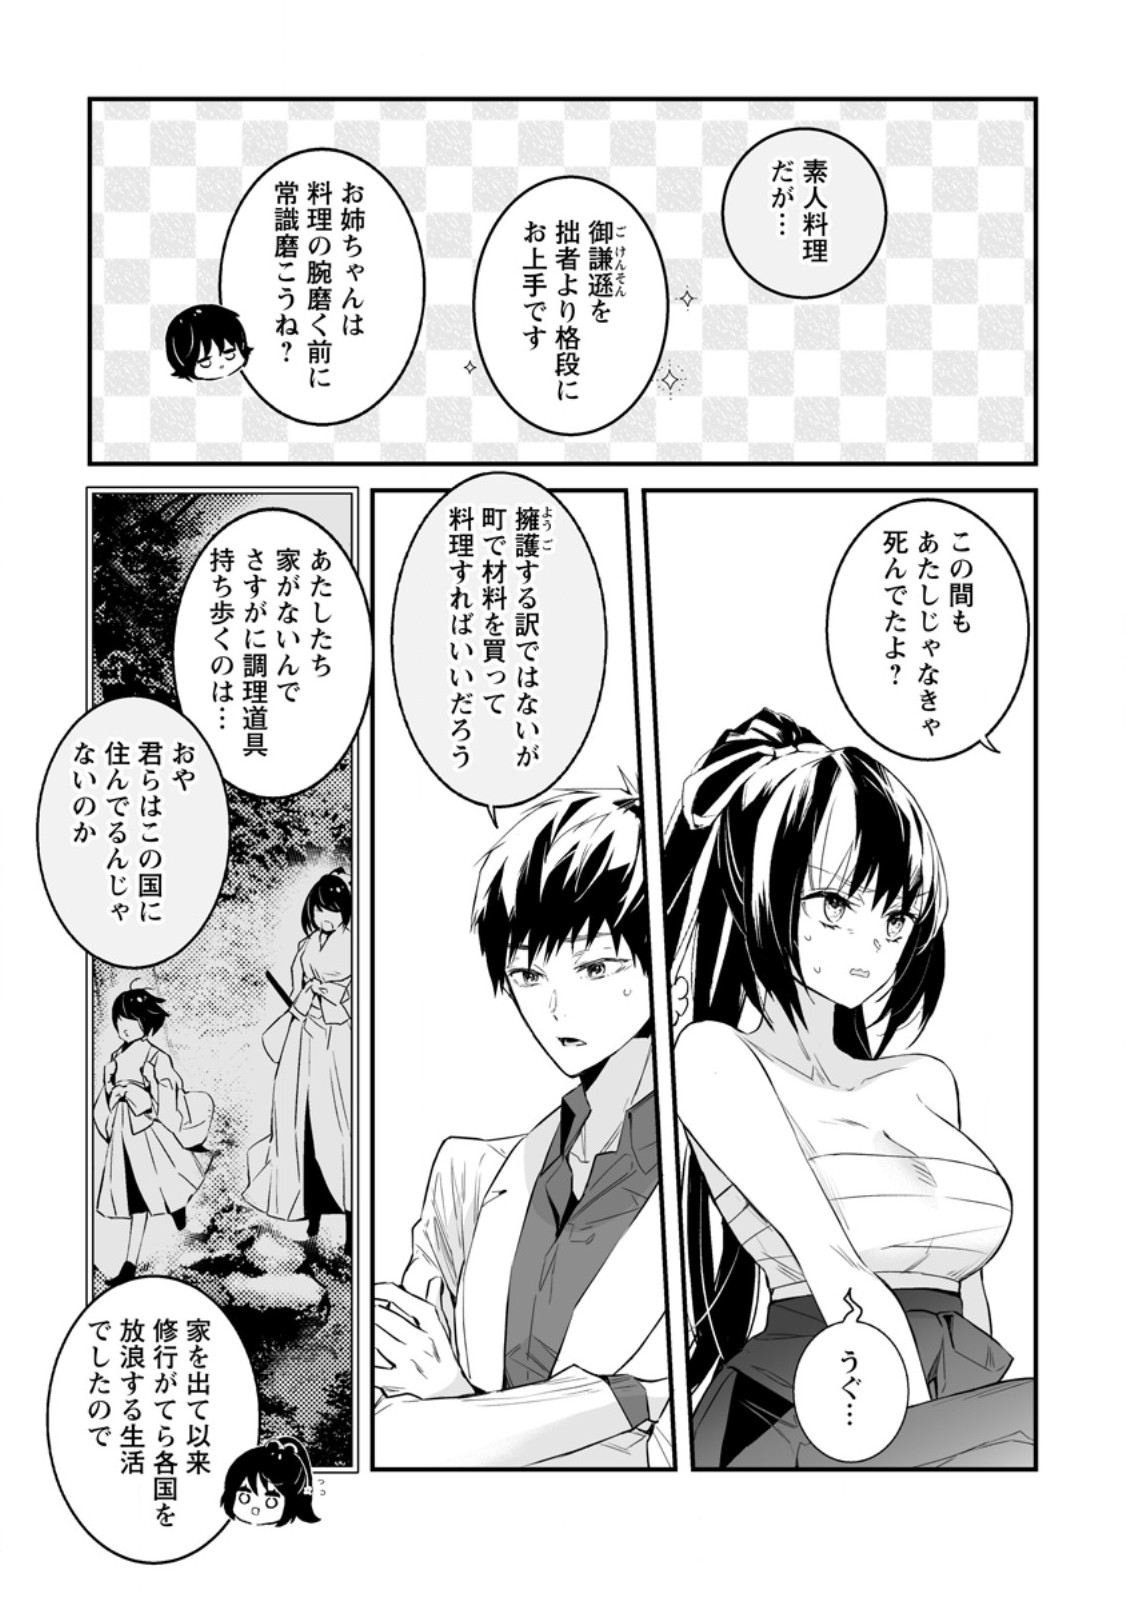 Hakui no Eiyuu - Chapter 32.3 - Page 8